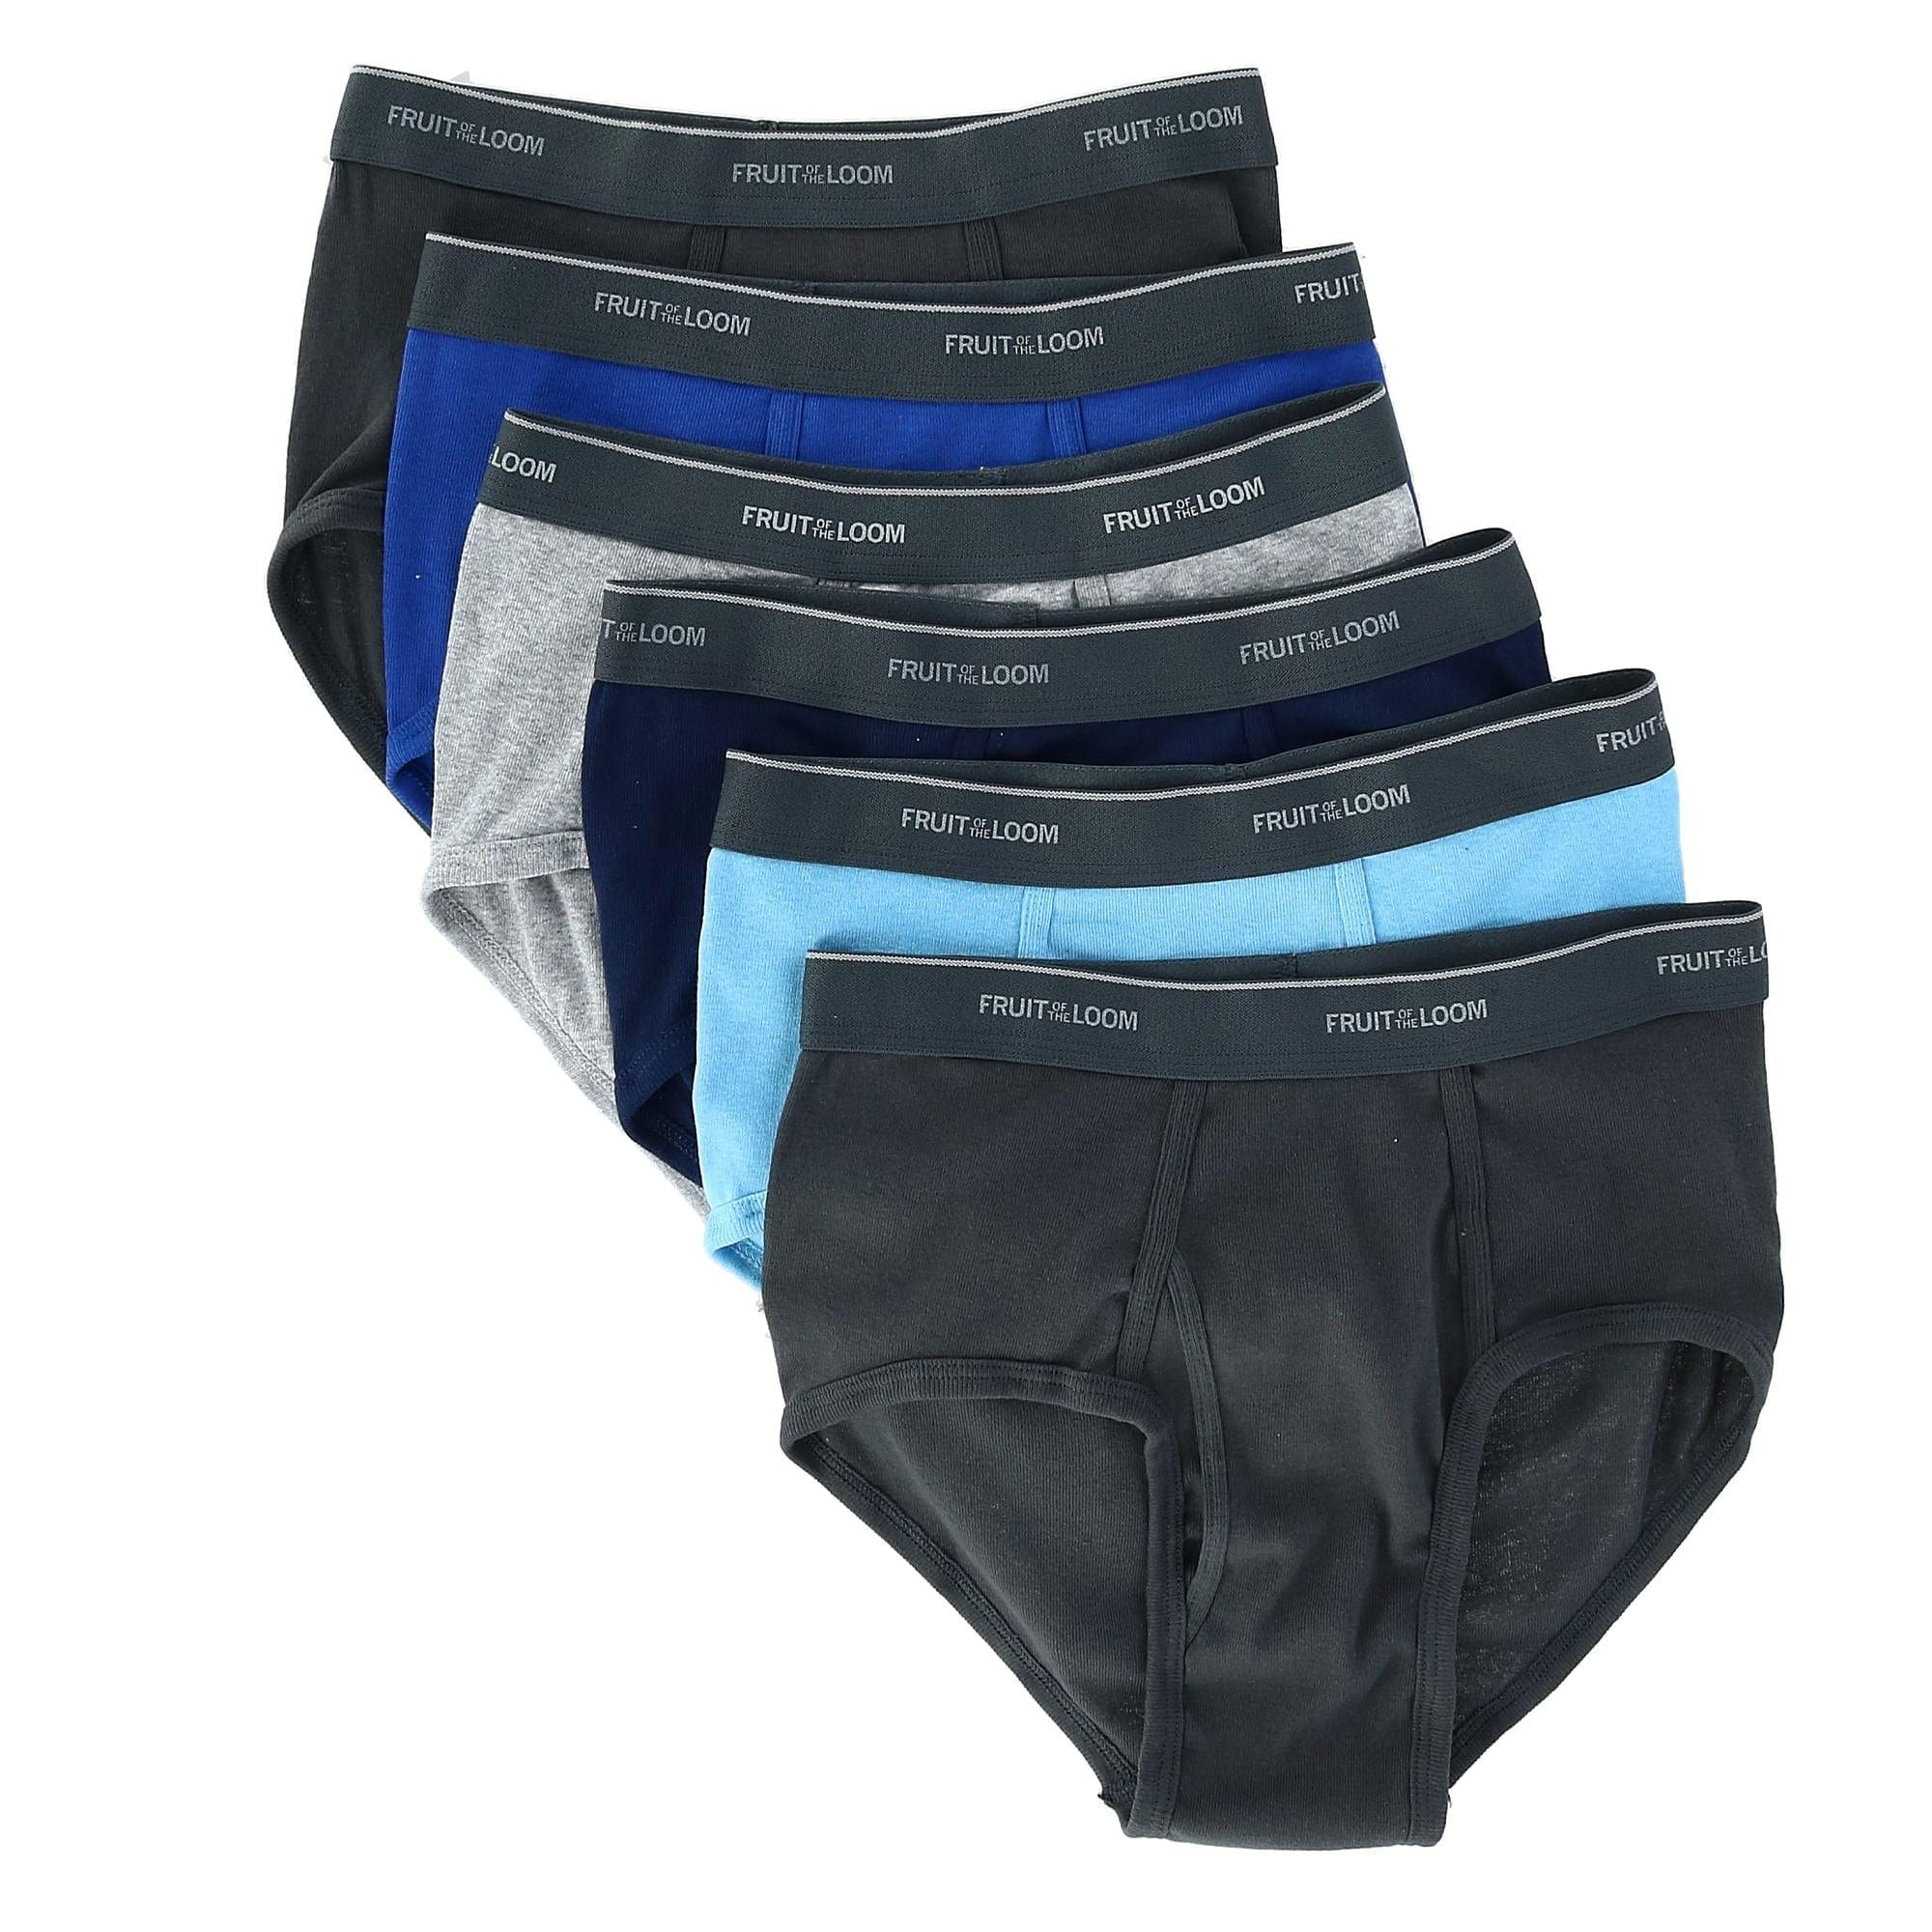 Men's Fashion Pattern Briefs Underwear ( 6 Pack) by Fruit of the Loom